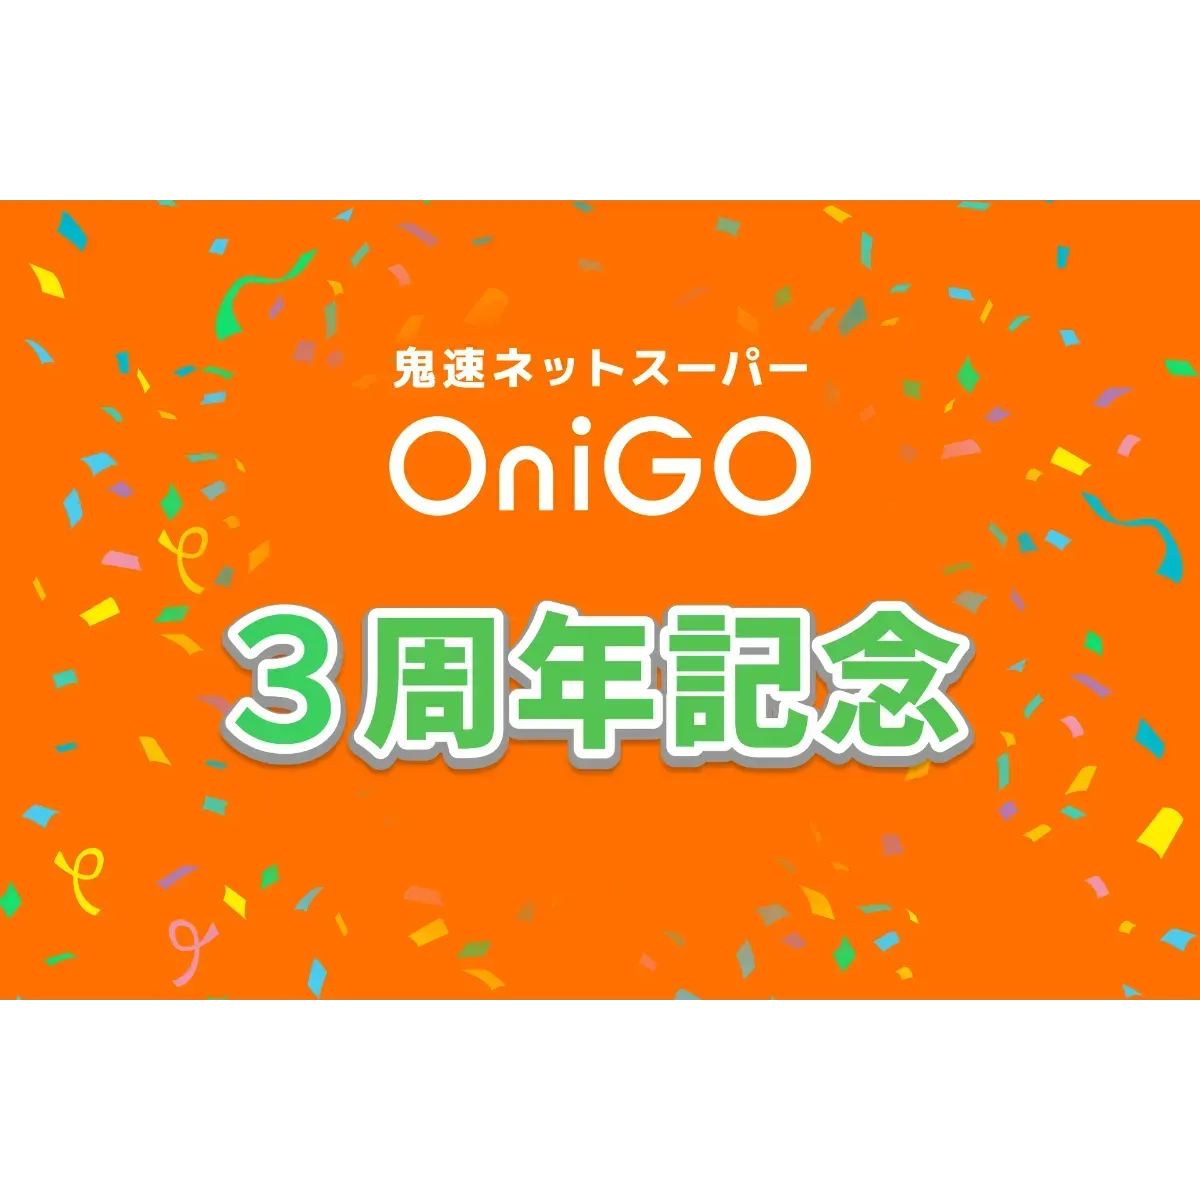 OniGOは3周年を迎えました〜Amazonギフトカード30,000円分が3名様に当たる #OniGO3YEAR キャンペーン実施！〜